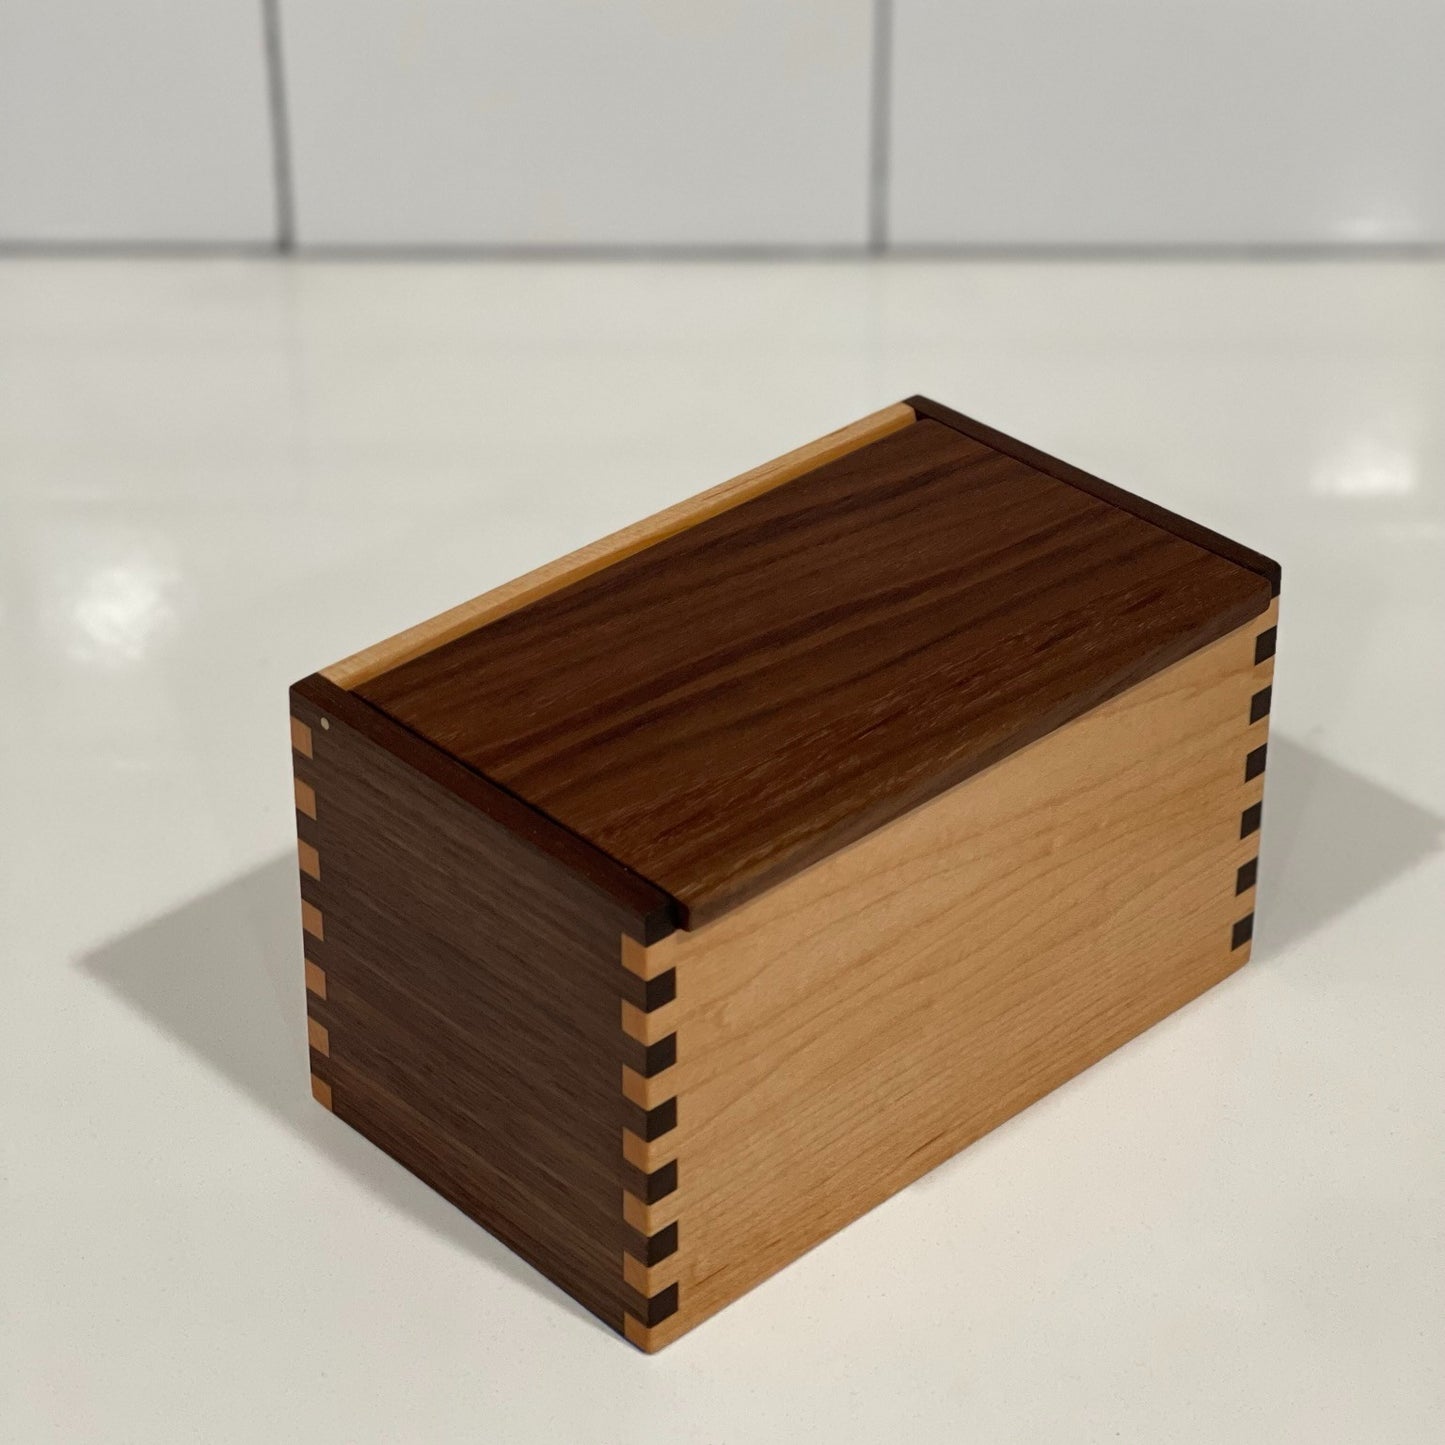 Wood Salt Cellar - Salt Box - Salt Pig - Keepsake Box - Walnut and Maple